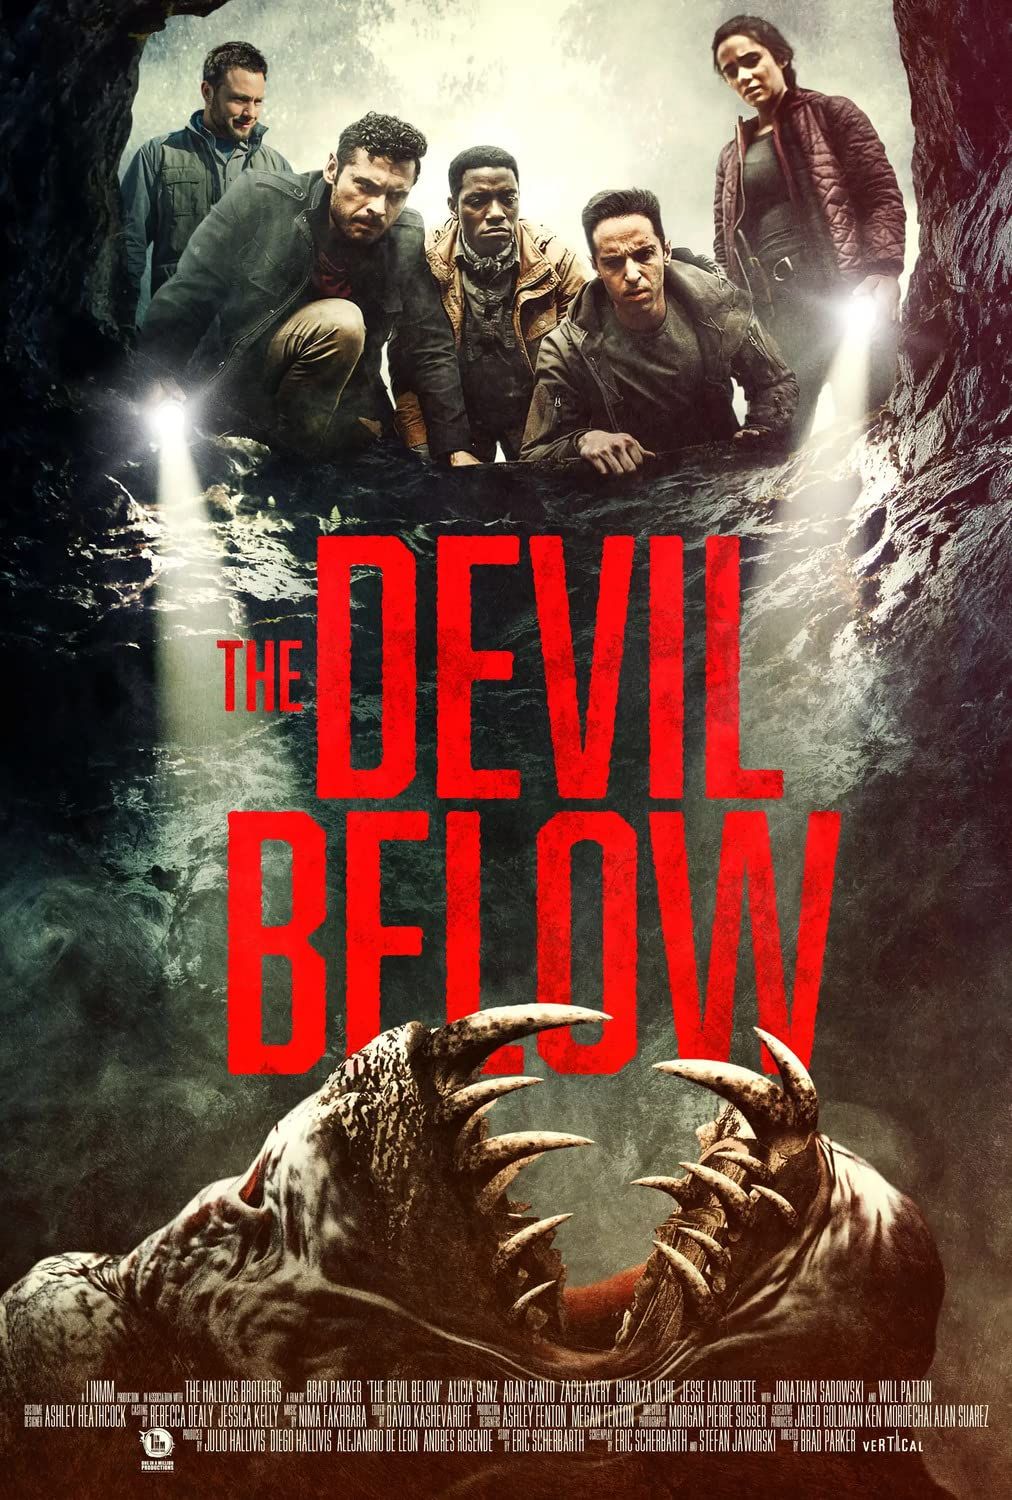 The Devil Below (2021) Hindi Dubbed HDRip download full movie